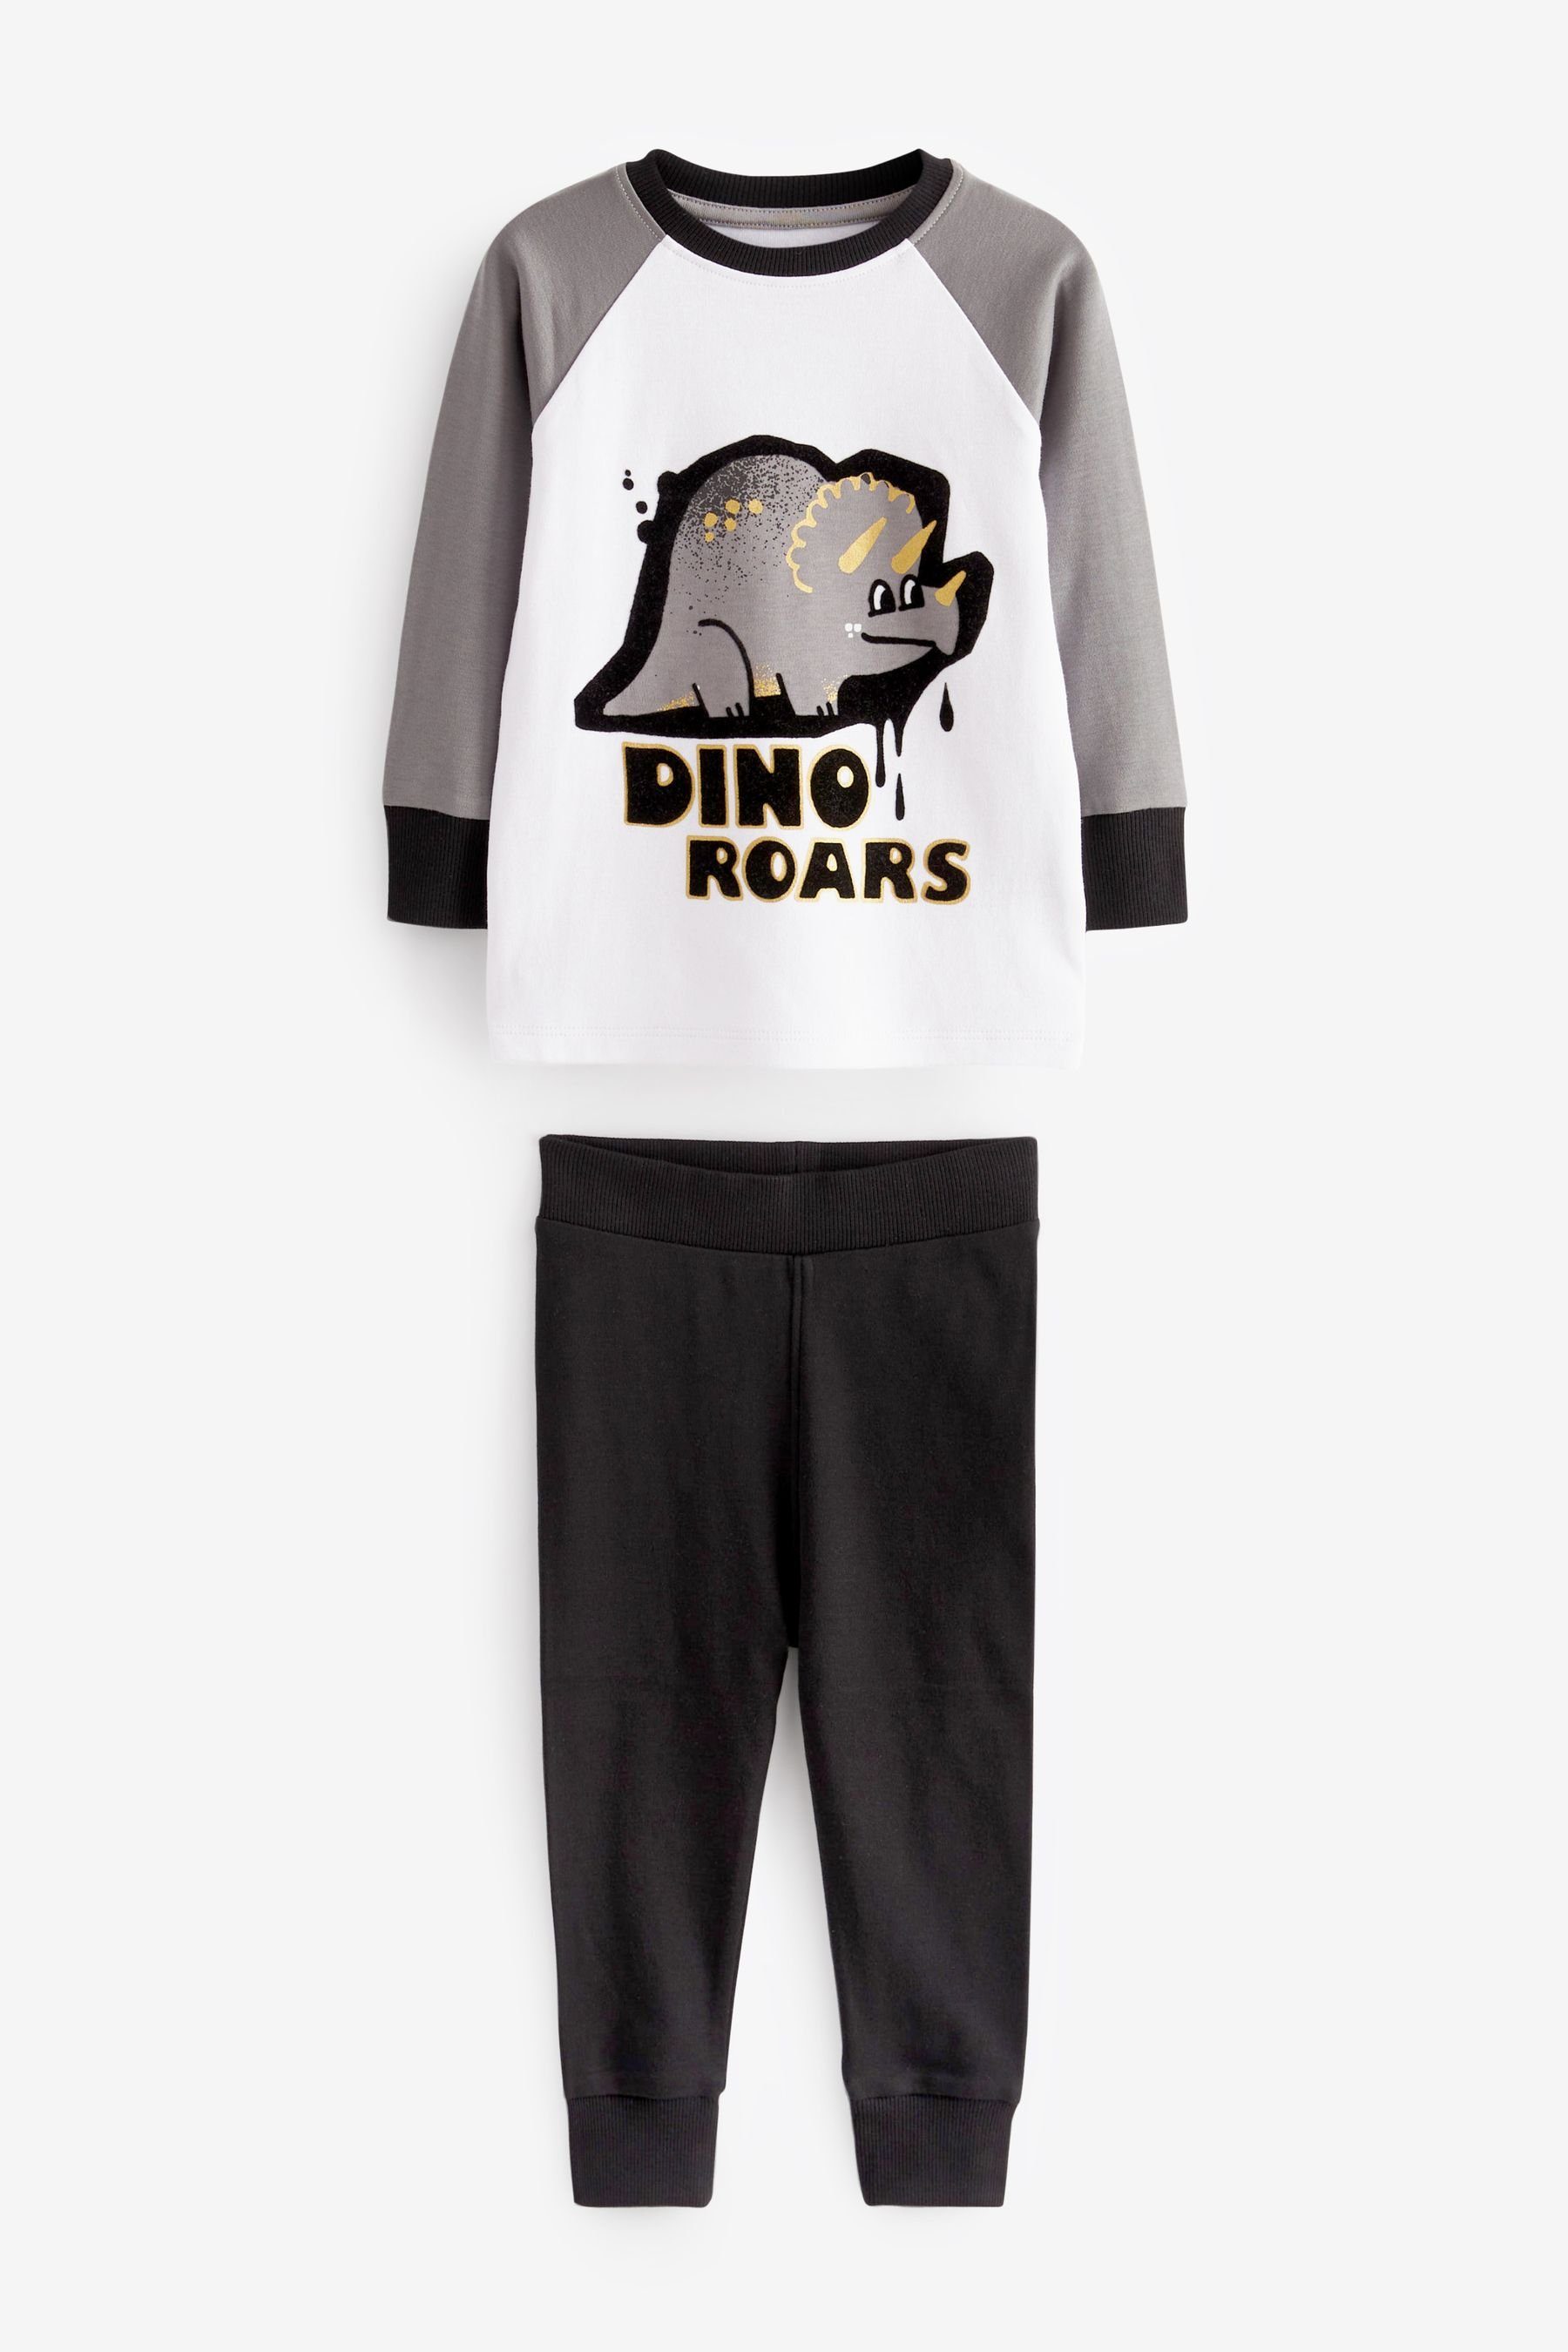 Pyjama tlg) Black/Gold 3er-Pack Next Dinosaur Snuggle Schlafanzüge (6